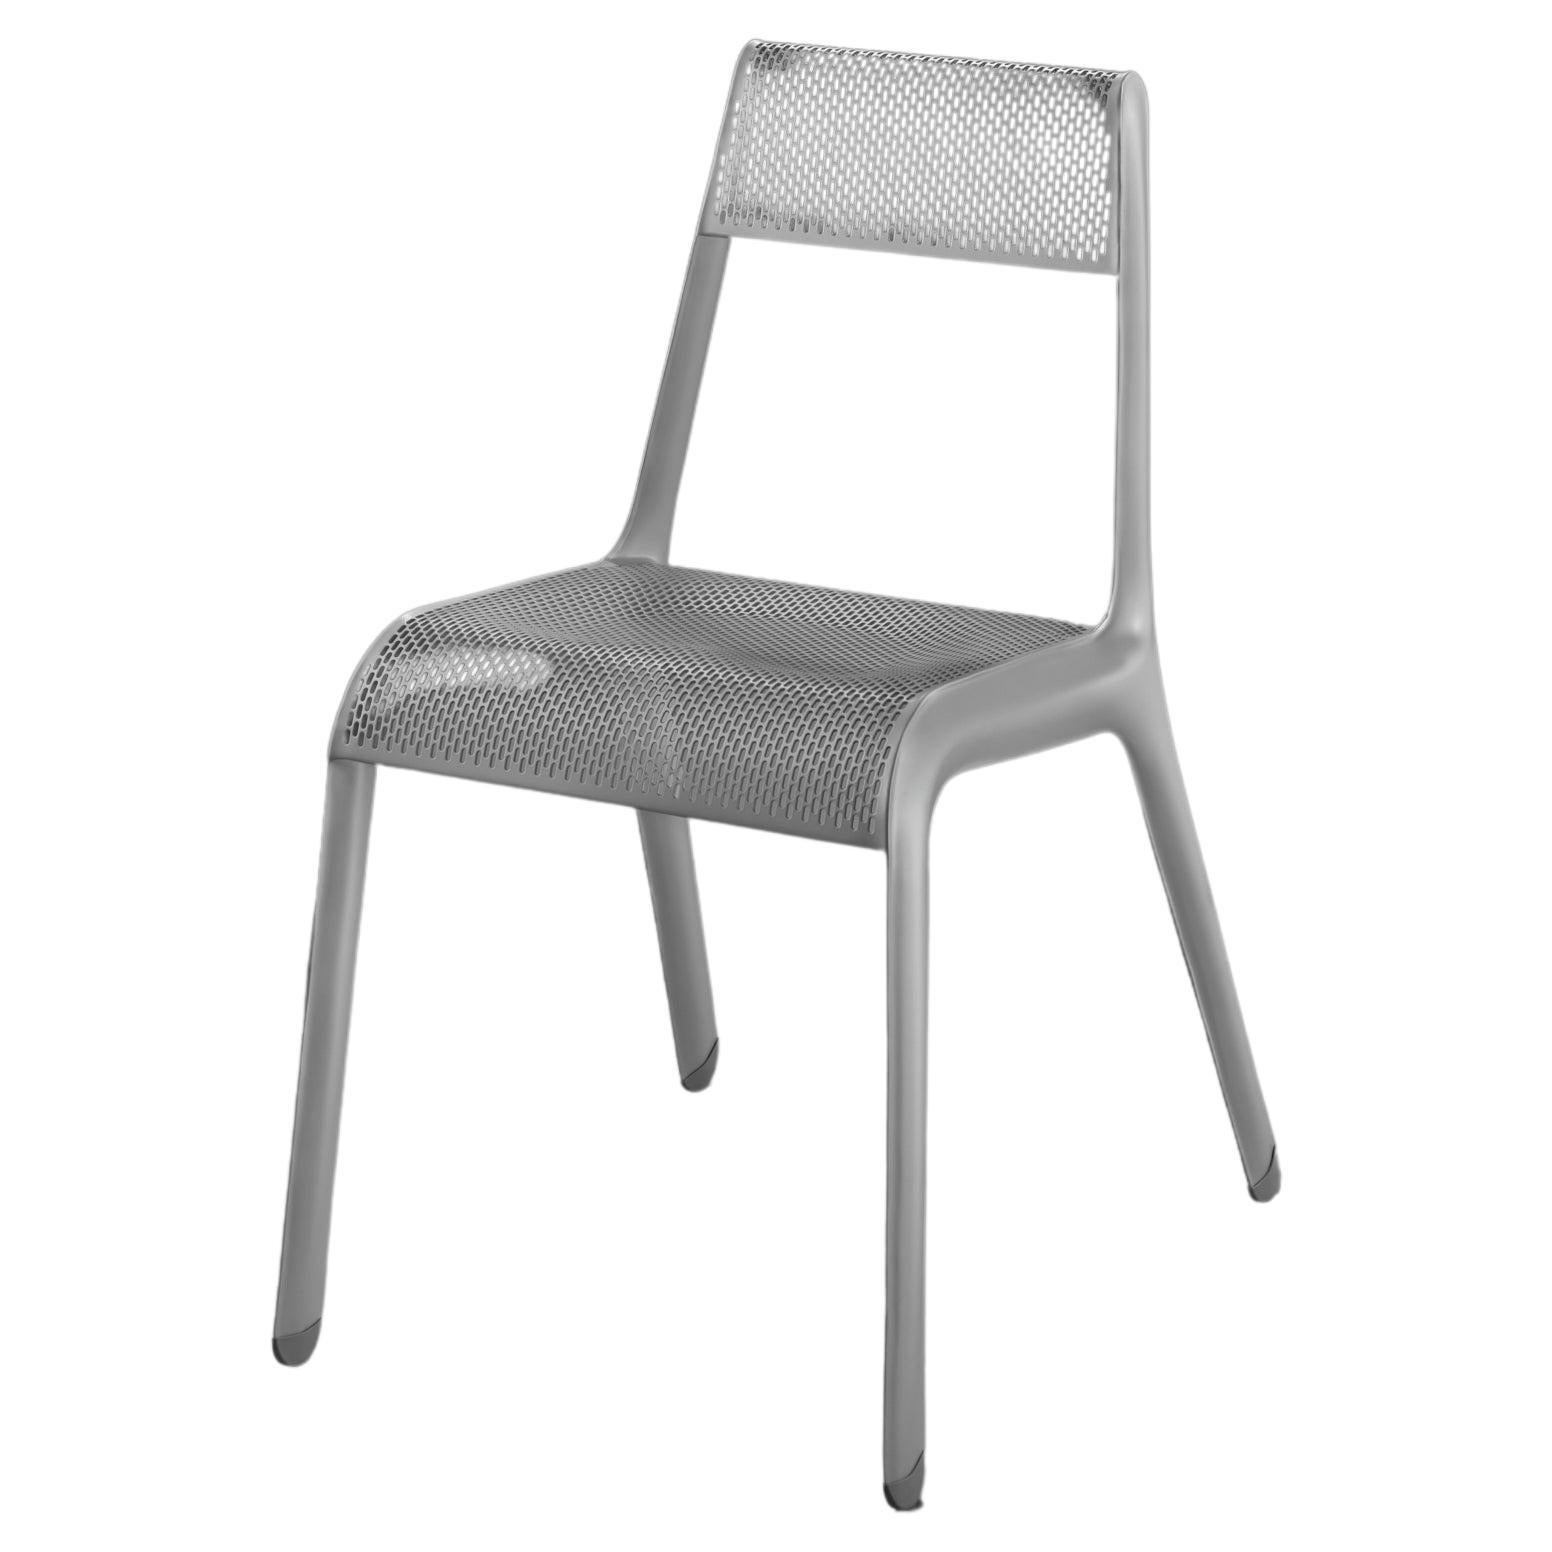 Natural Anodic Ultraleggera Chair by Zieta For Sale